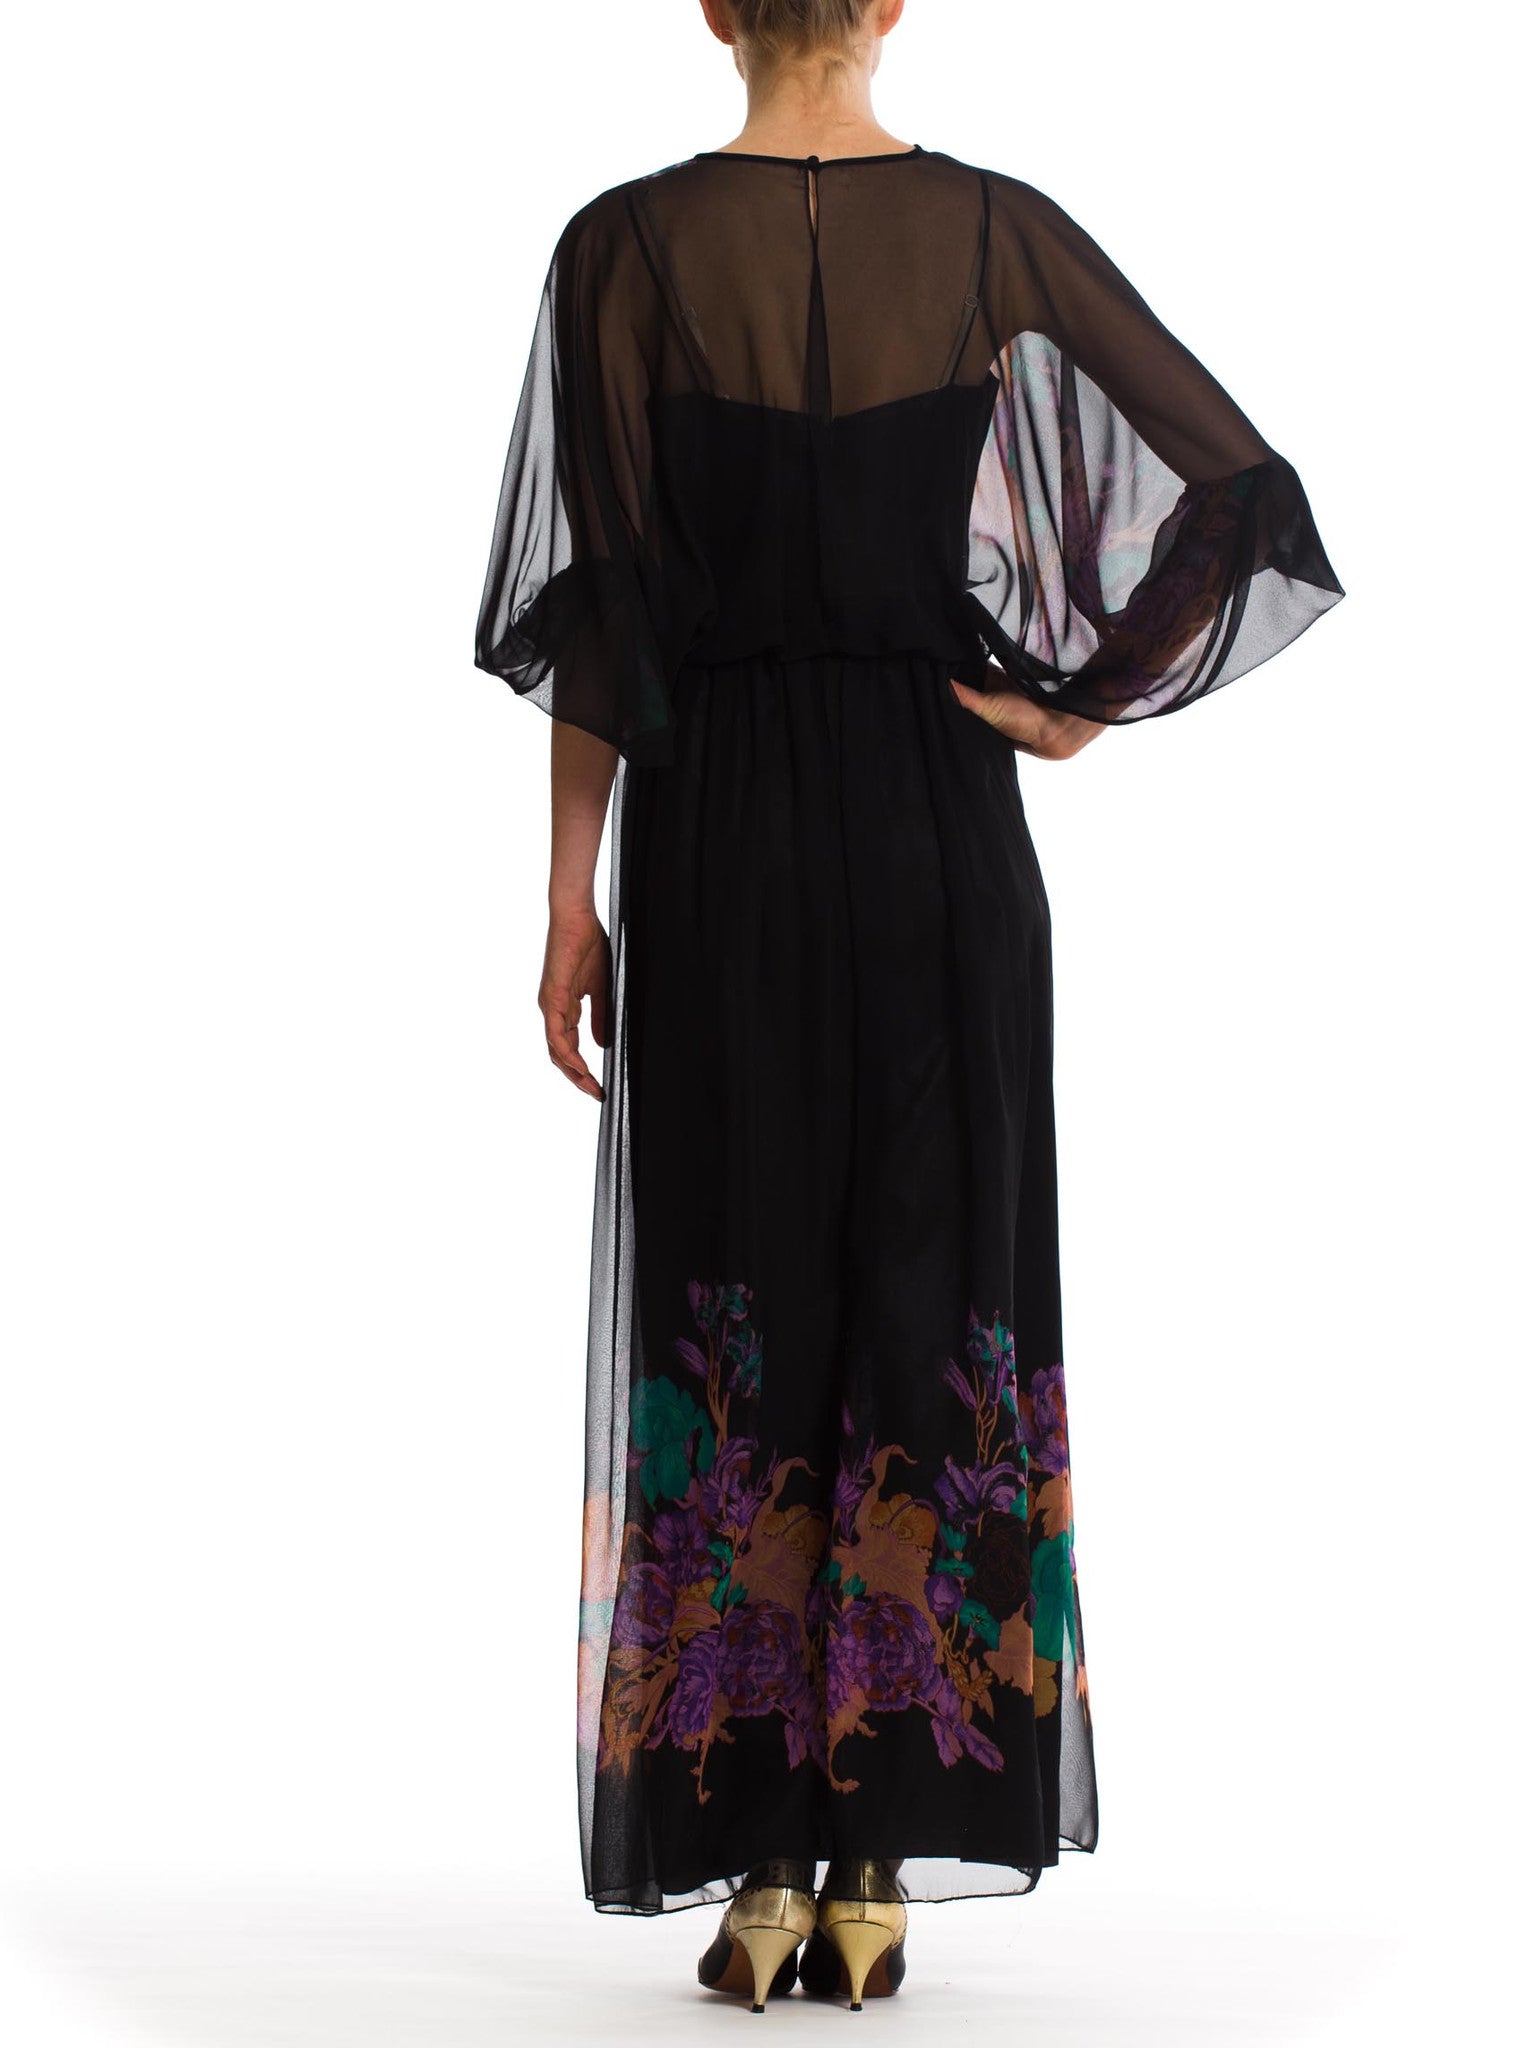 Charming Vintage 1970s Black Floral Print Dress – MORPHEW